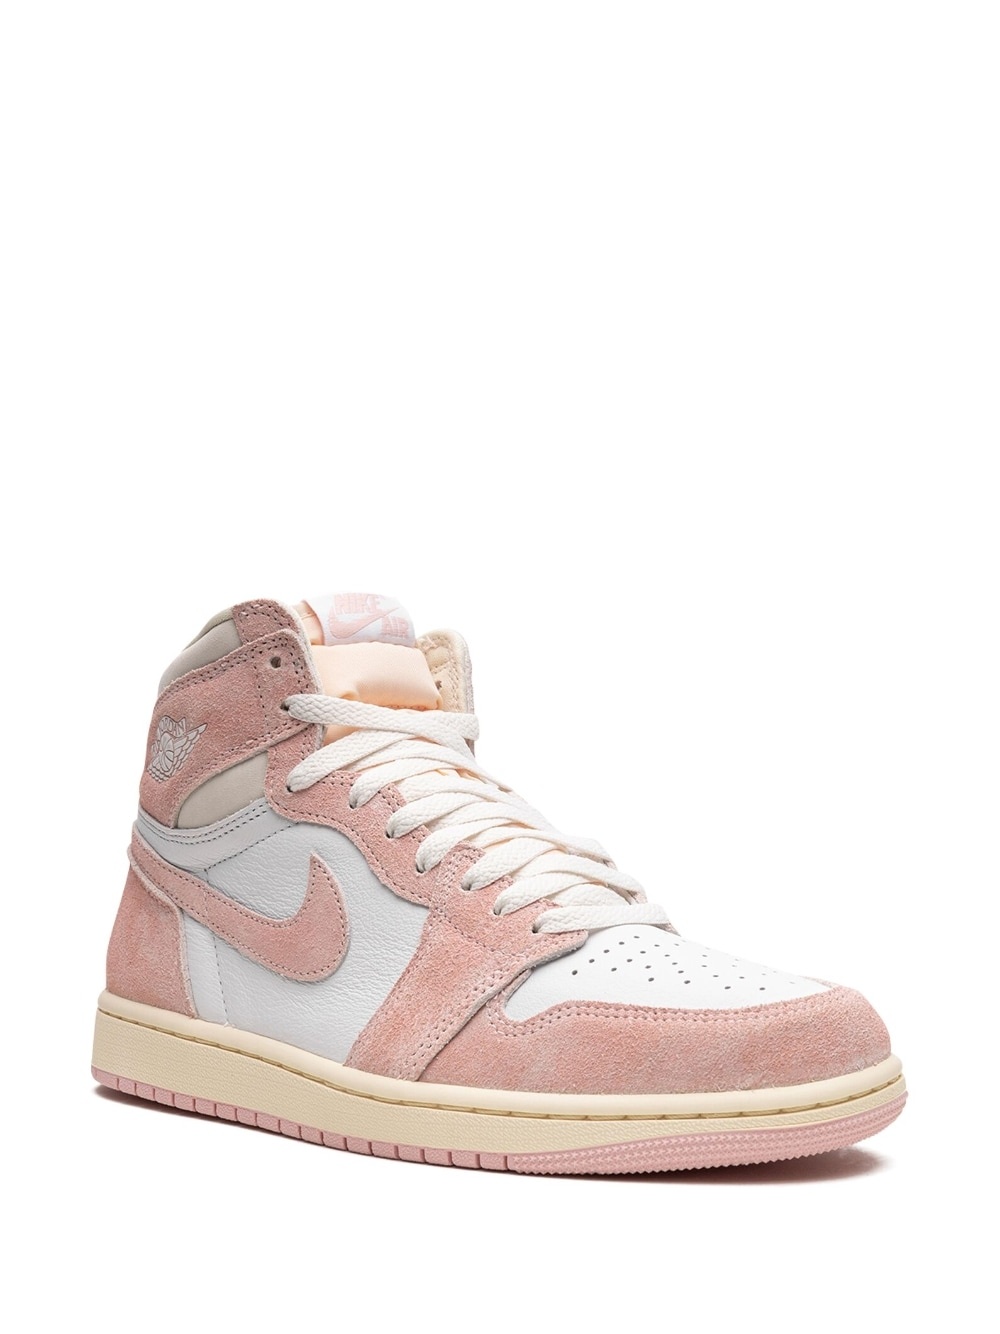 Air Jordan 1 "Washed Pink" sneakers - 2